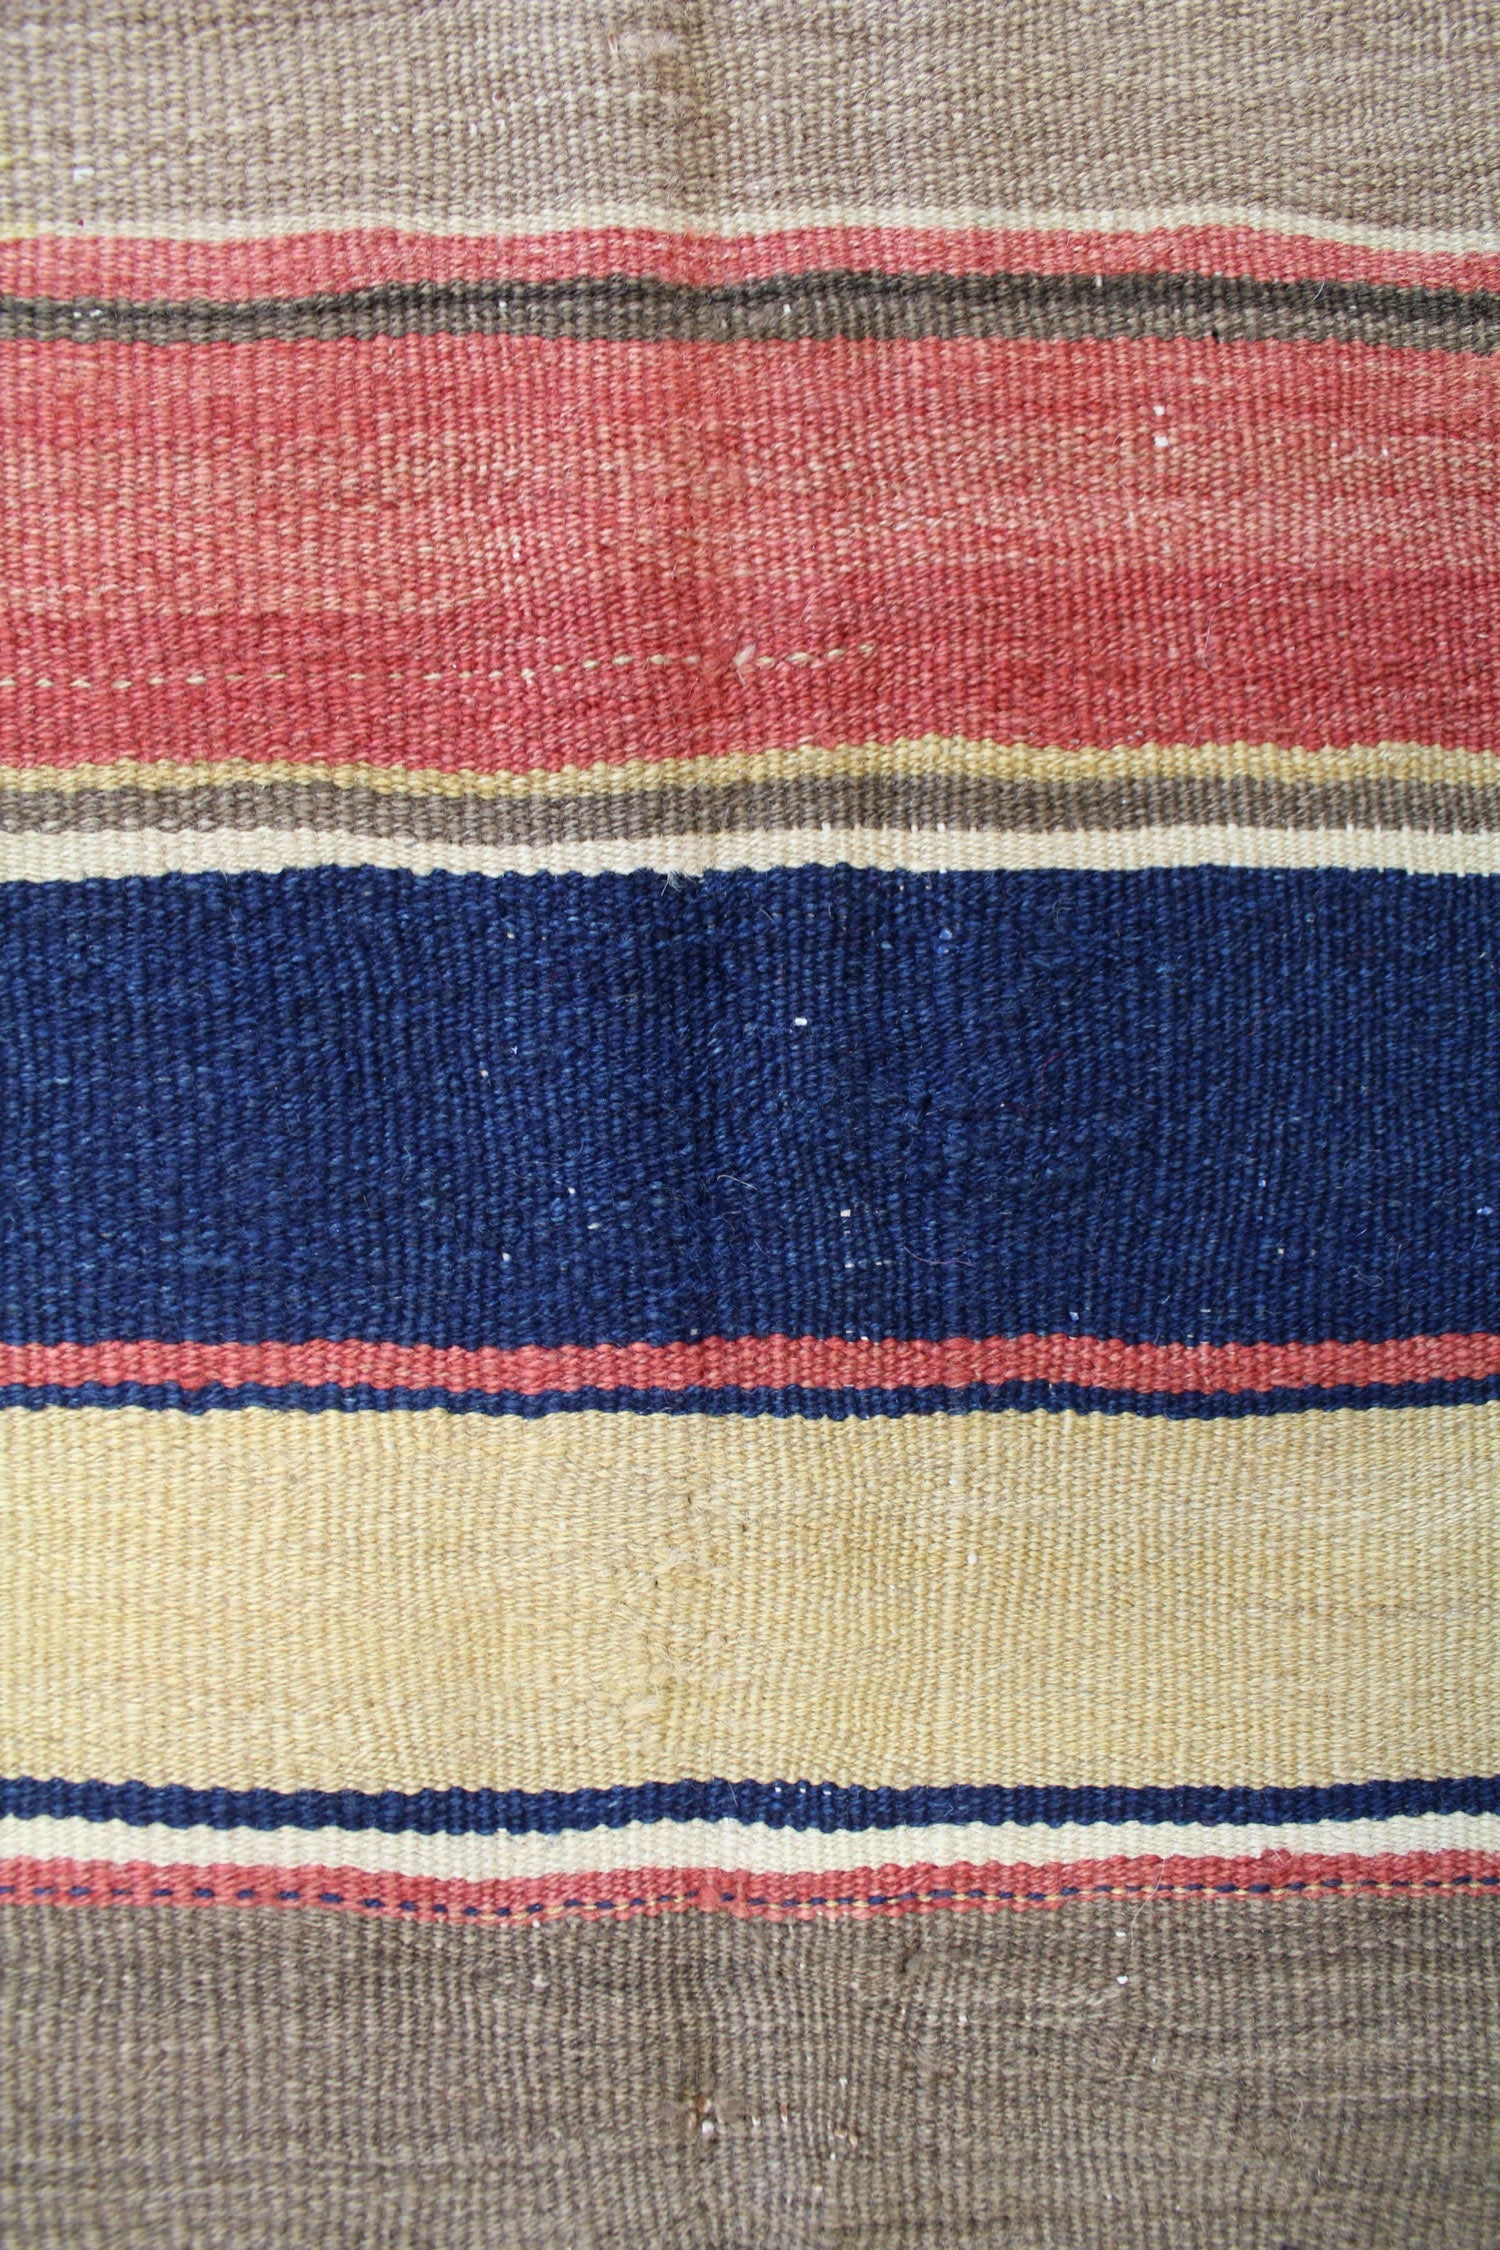 Vintage Shrivan Kilim Handwoven Tribal Rug, J63346